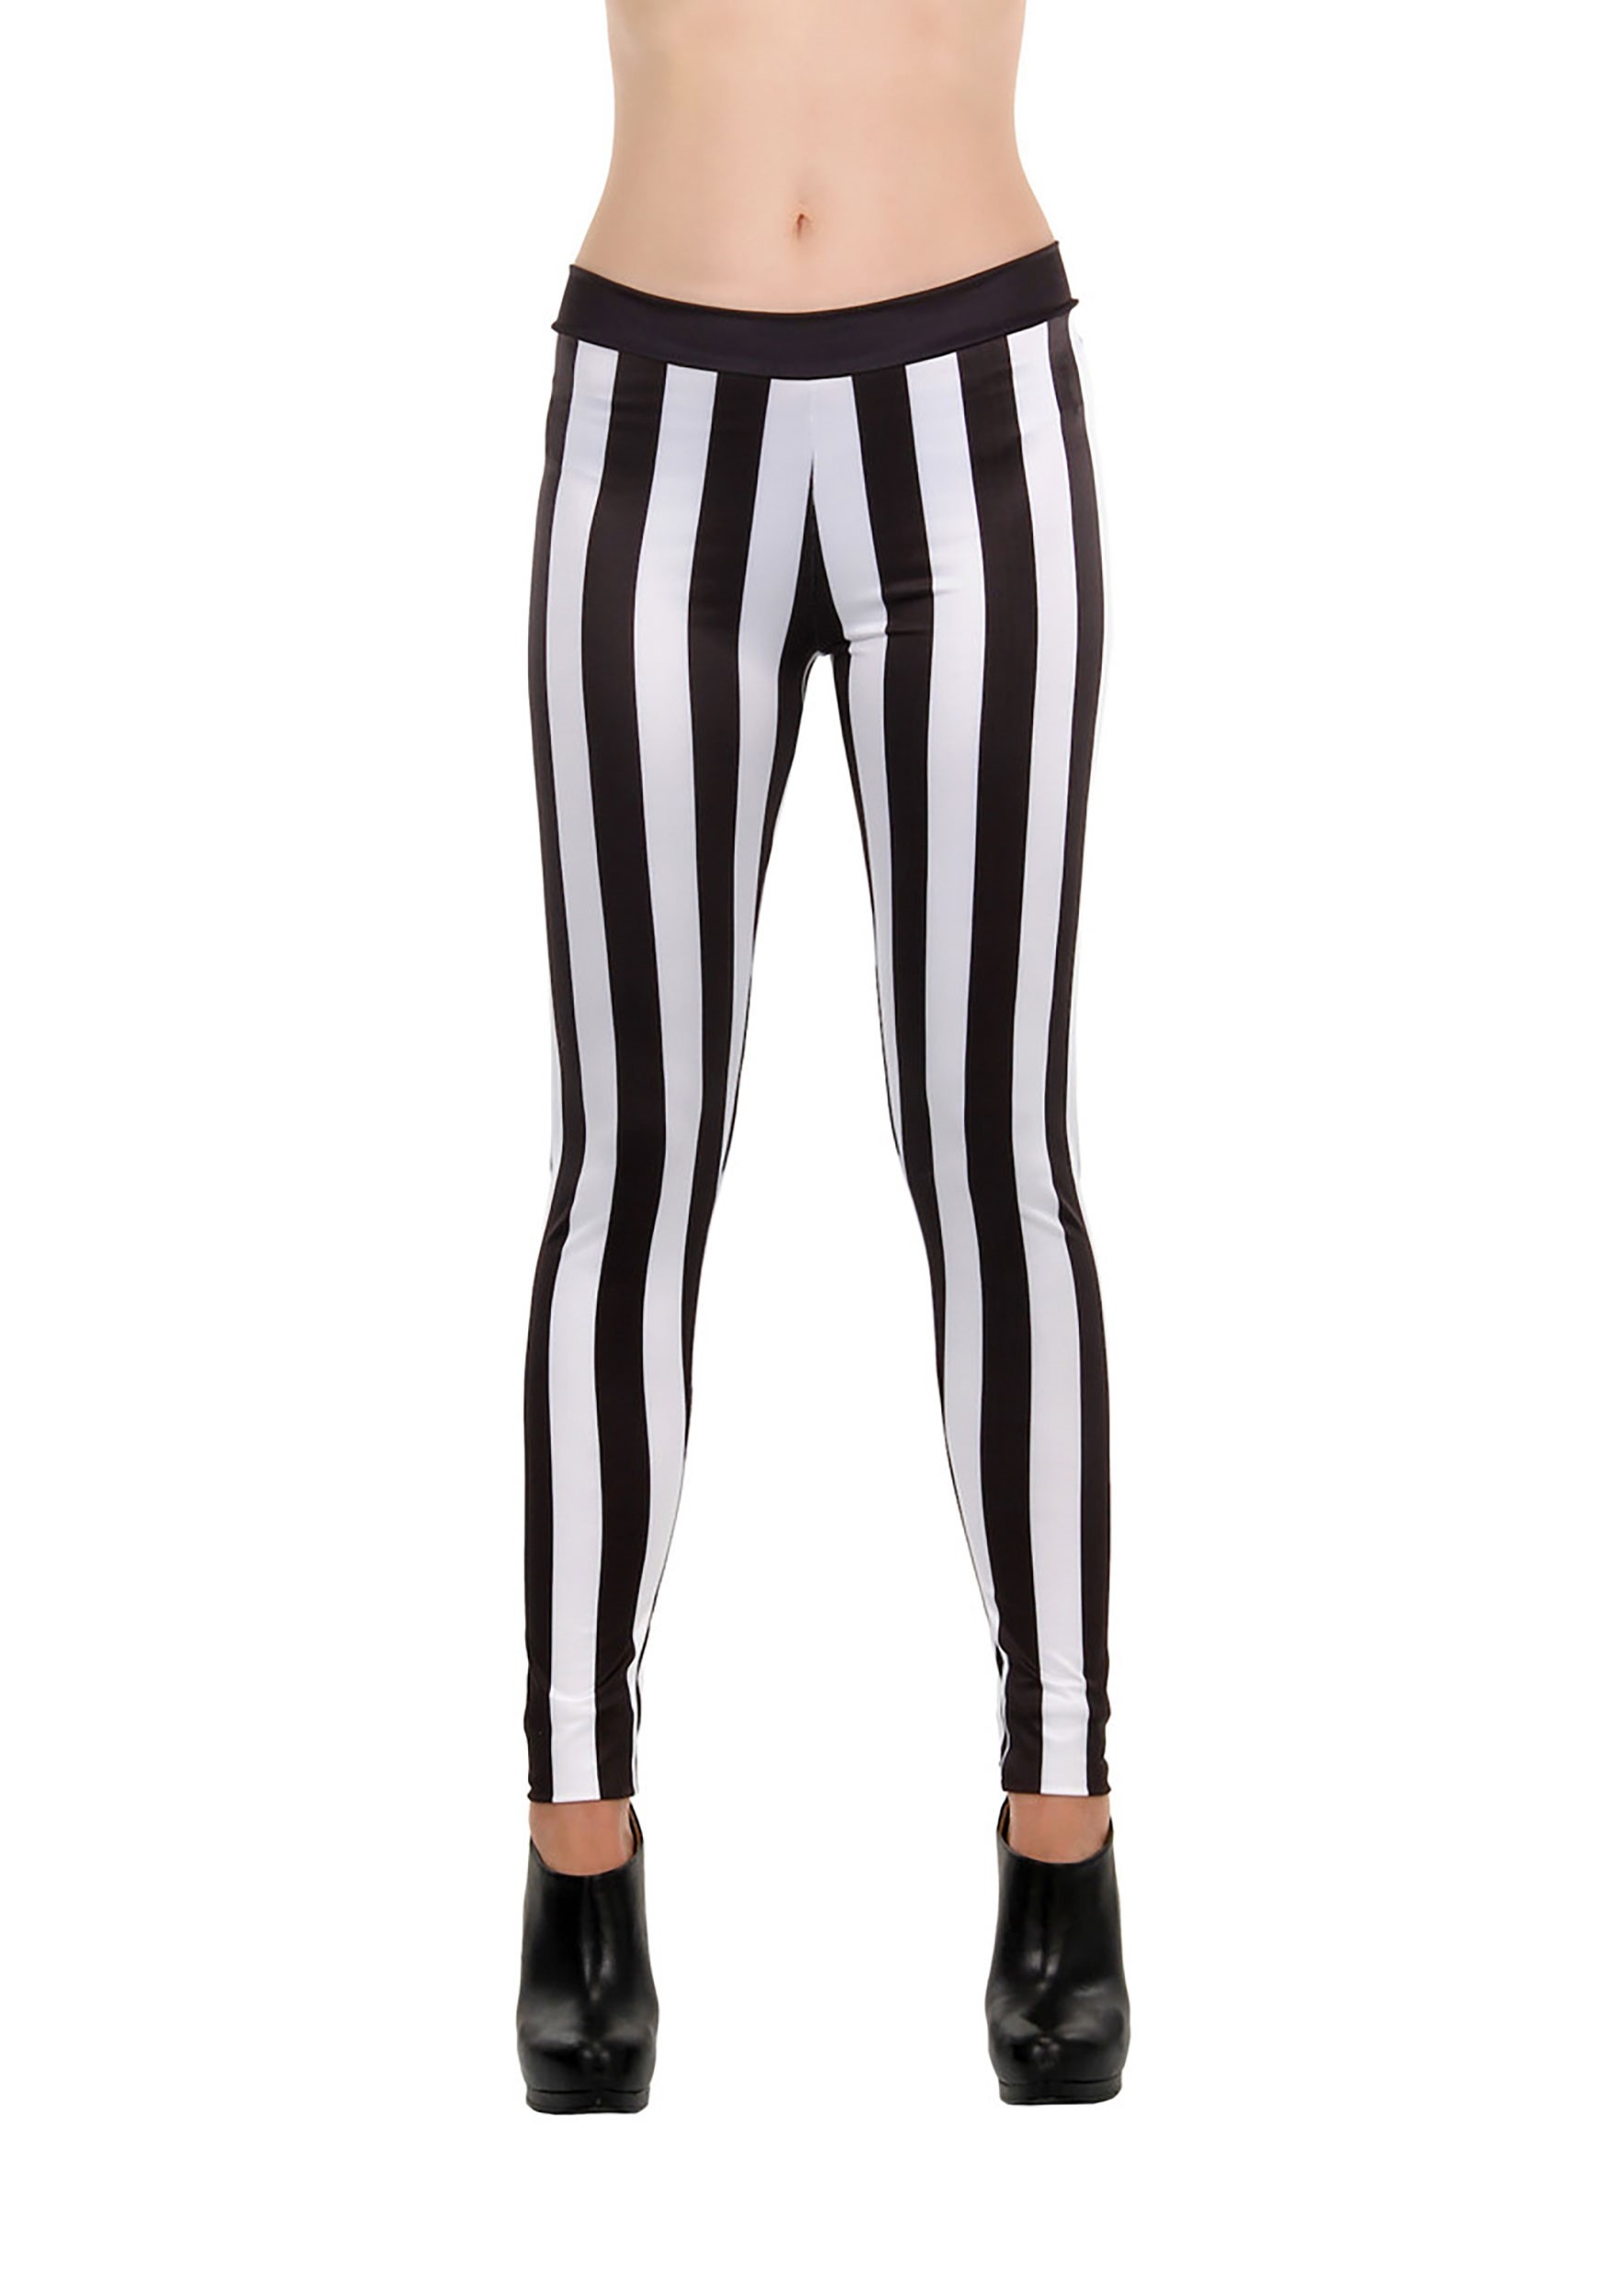 White With Black Stripes Leggings - Buy White With Black Stripes Leggings  online in India